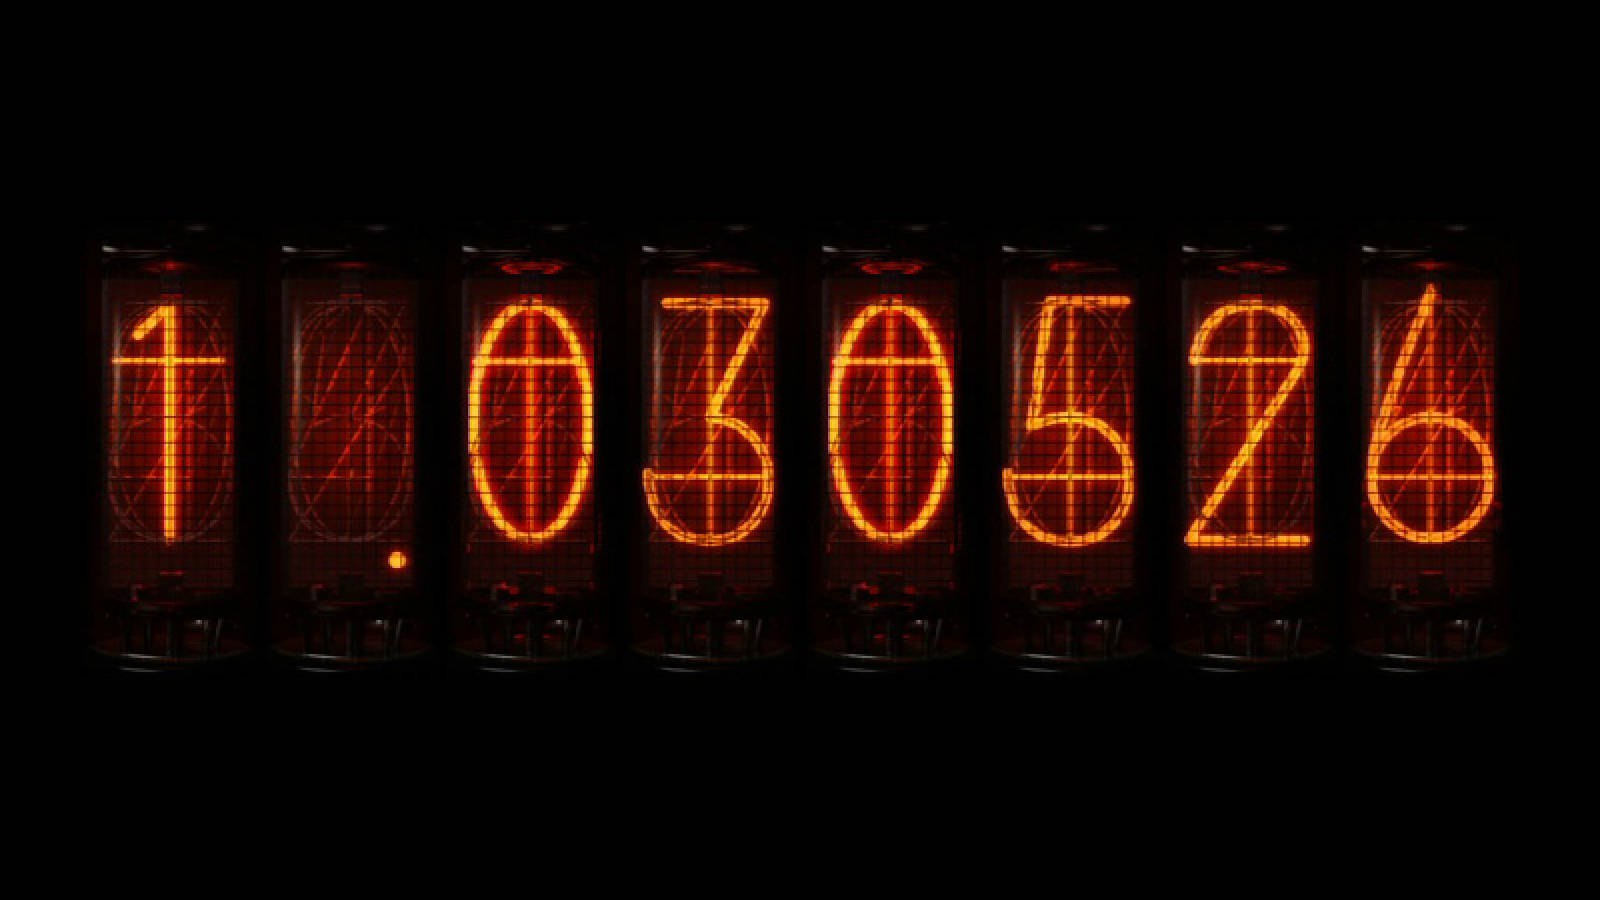 Steins Gate Digital Countdown Timer Wallpaper